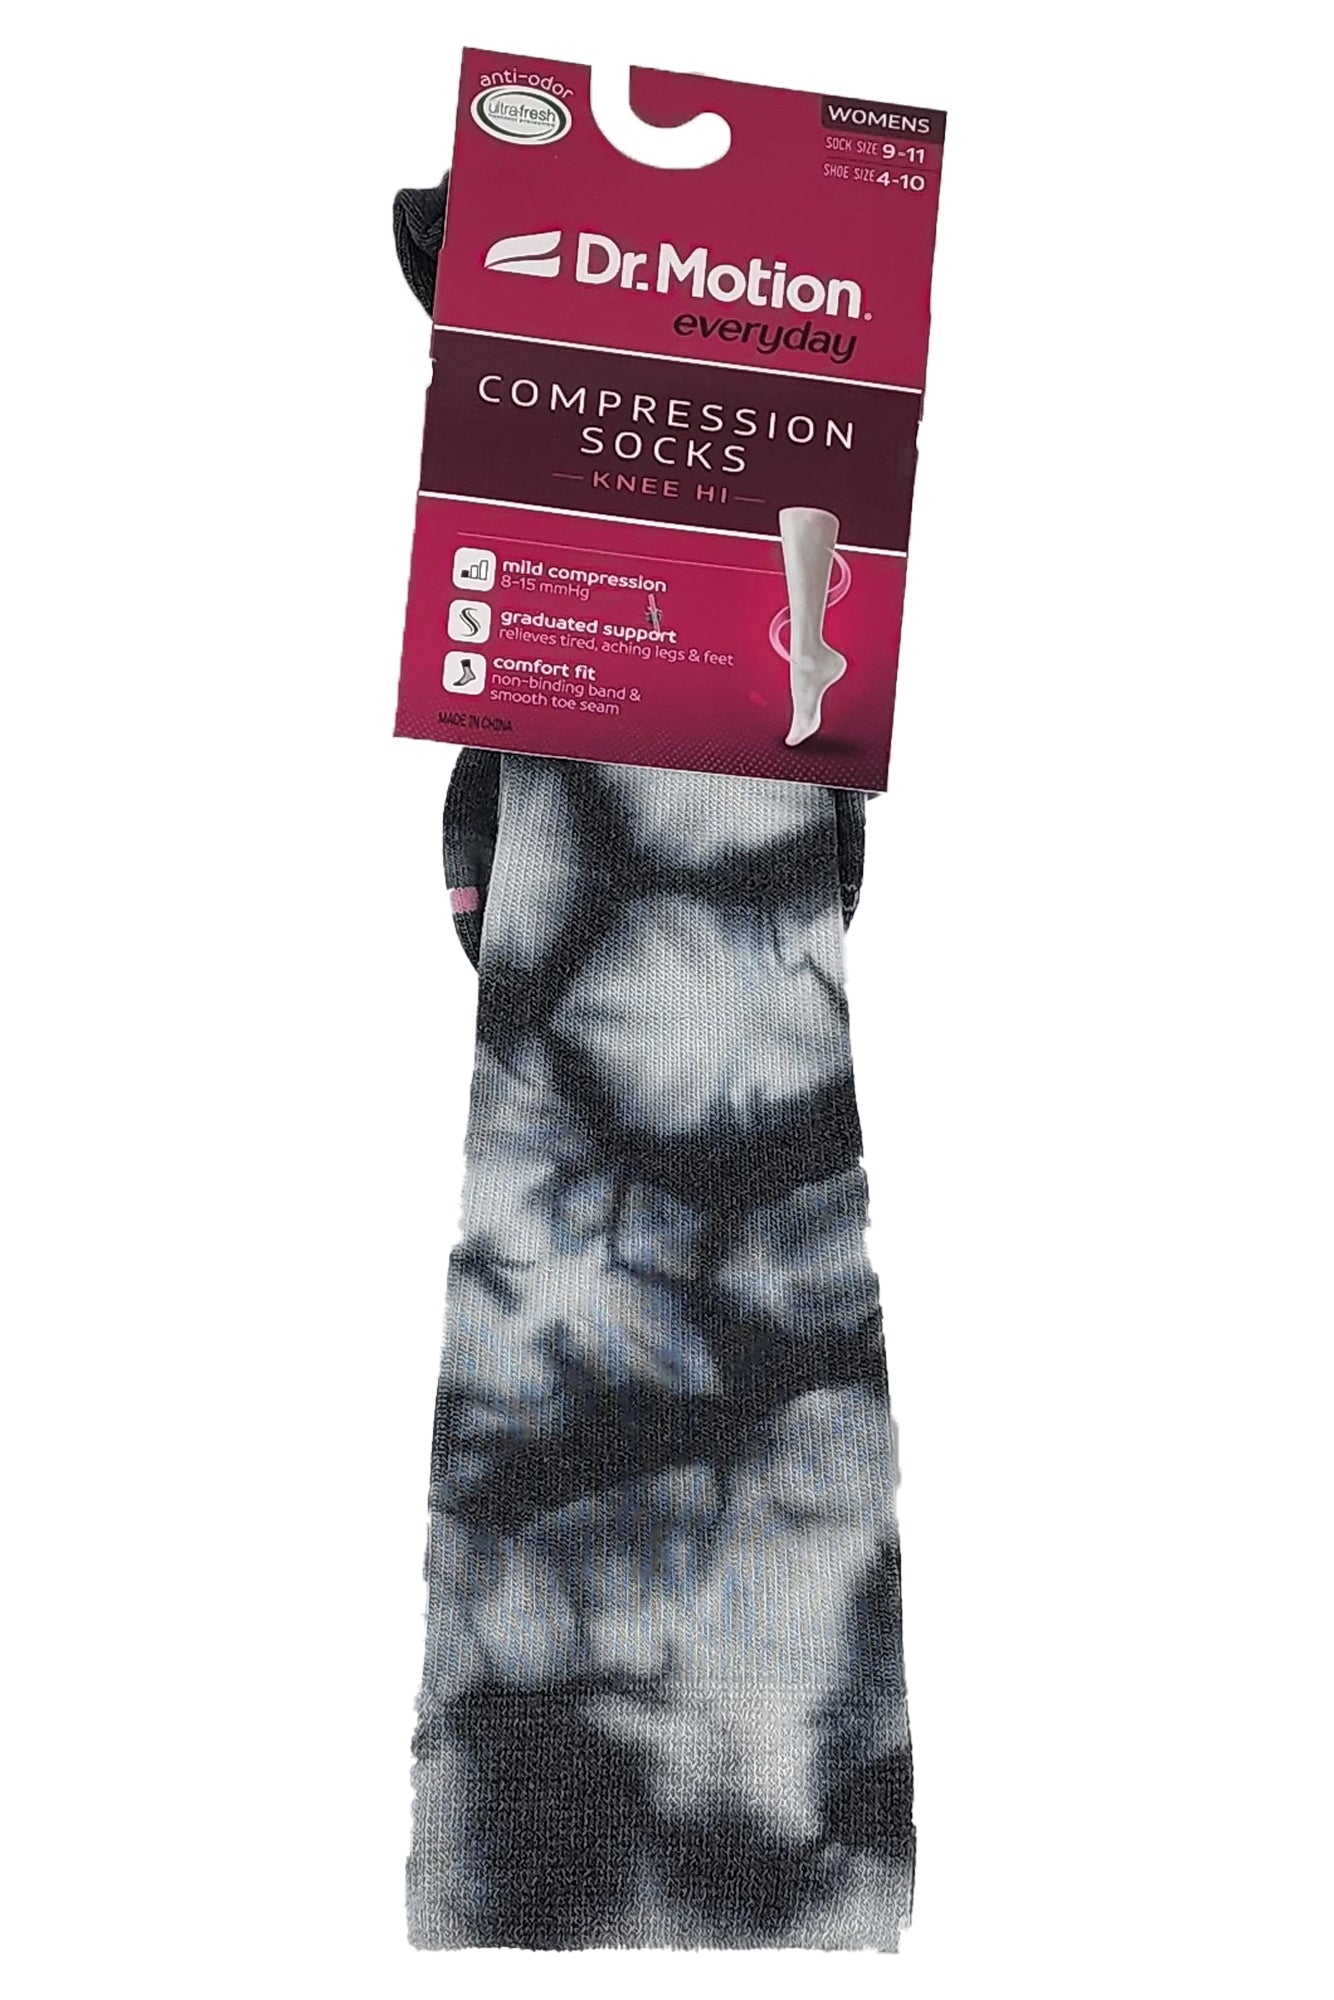  Compression Knee high socks